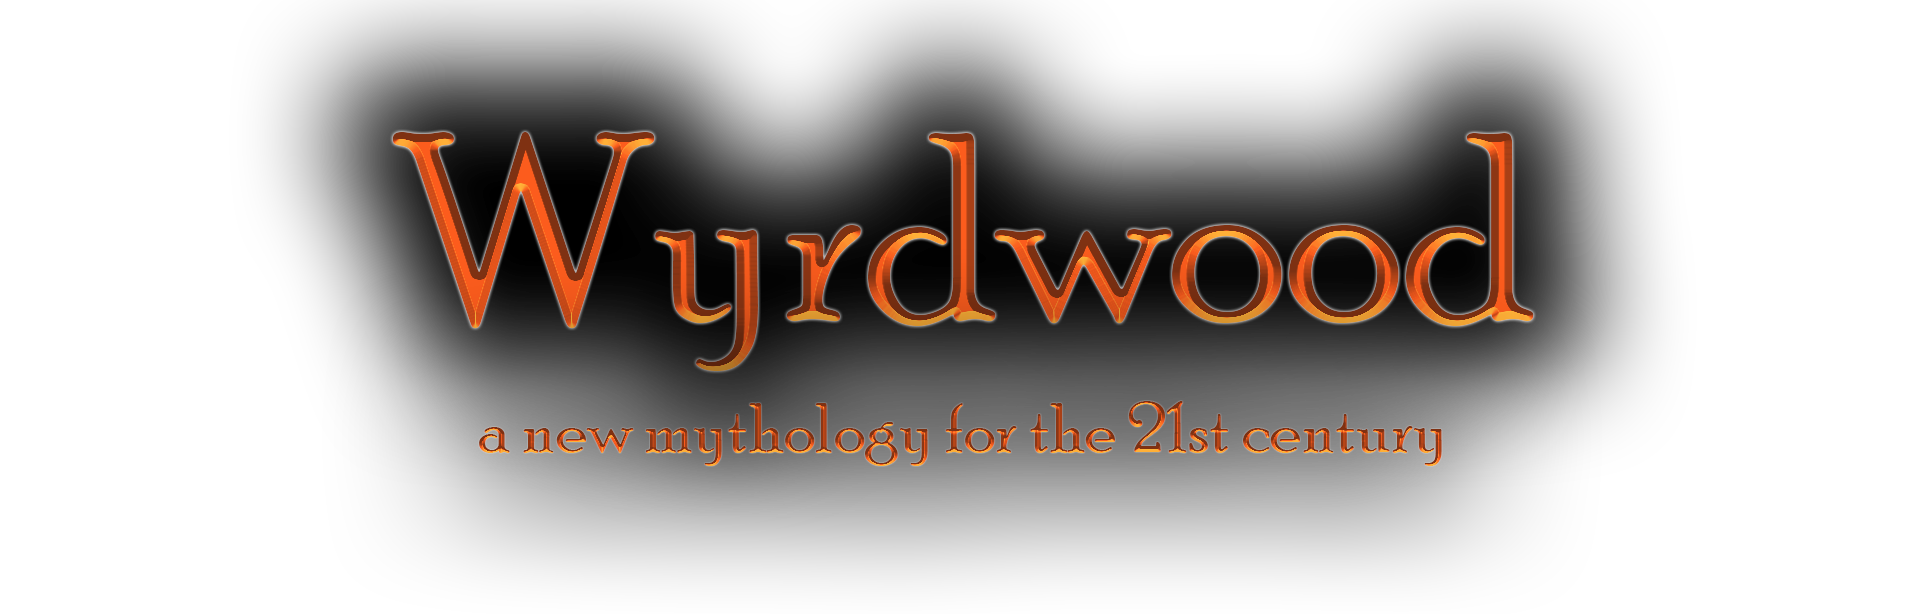 Wyrdwood Stories header image